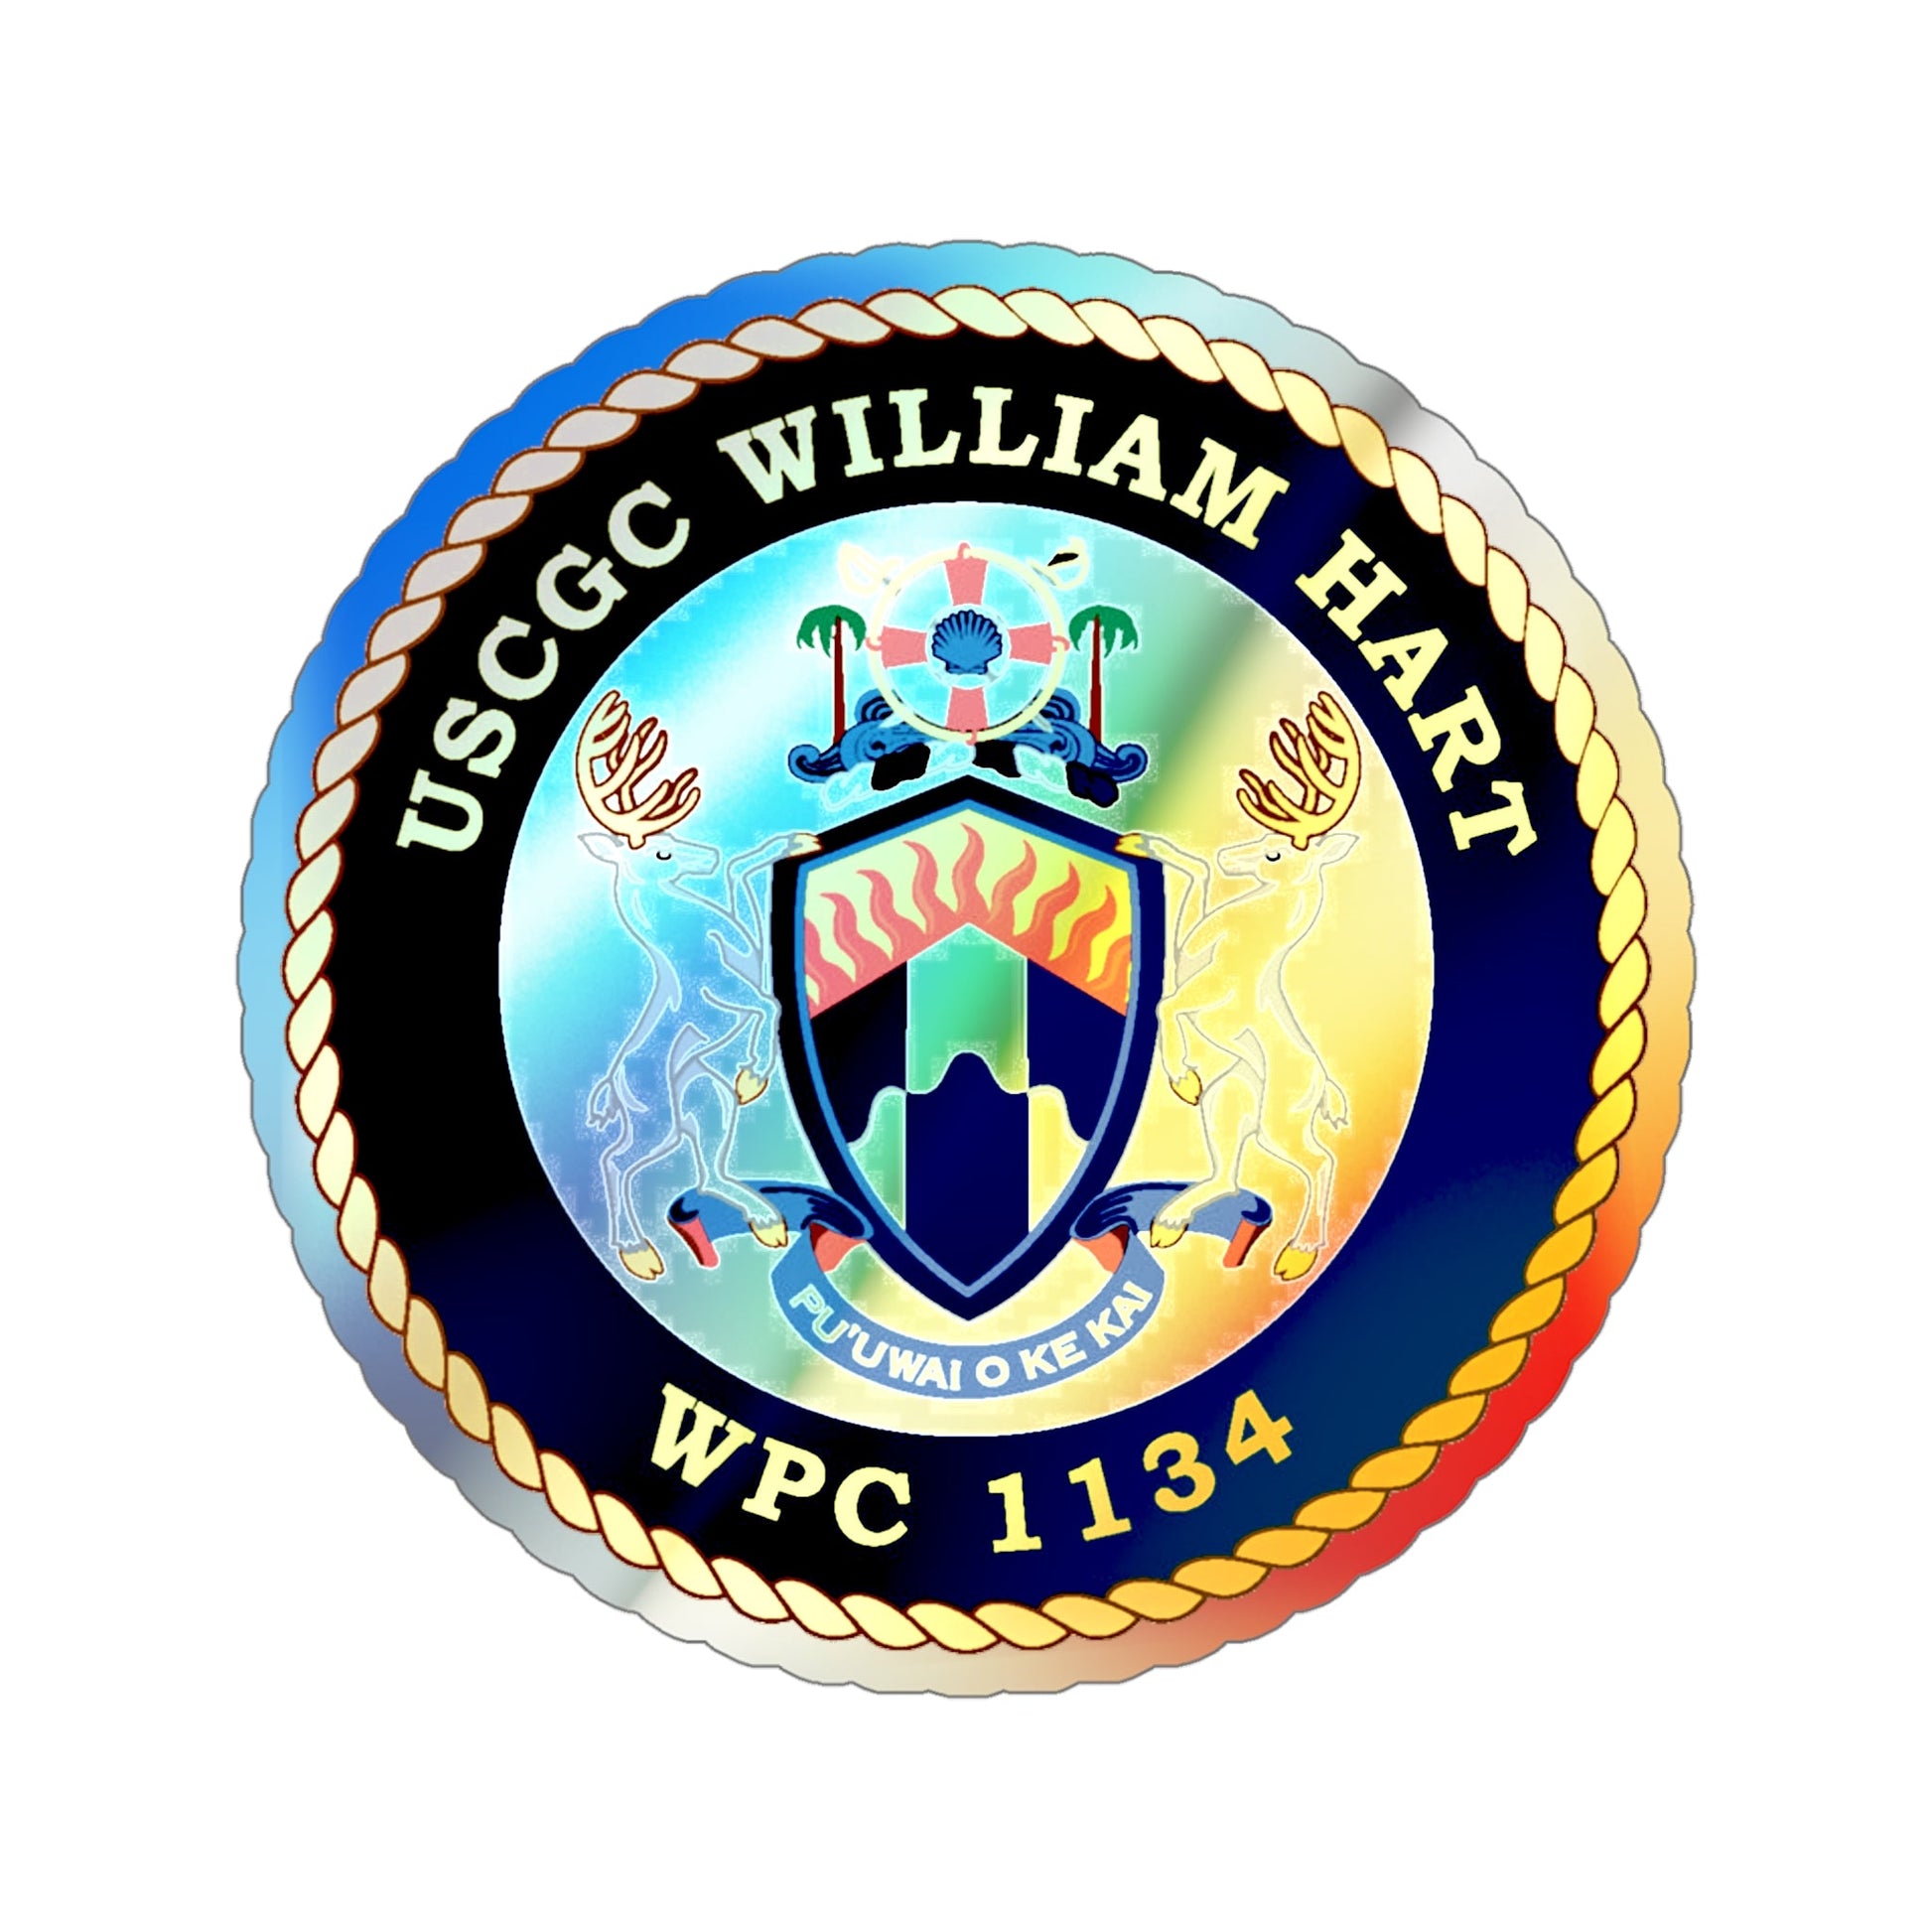 USCG C William Hart WPC 1134 (U.S. Coast Guard) Holographic STICKER Die-Cut Vinyl Decal-5 Inch-The Sticker Space